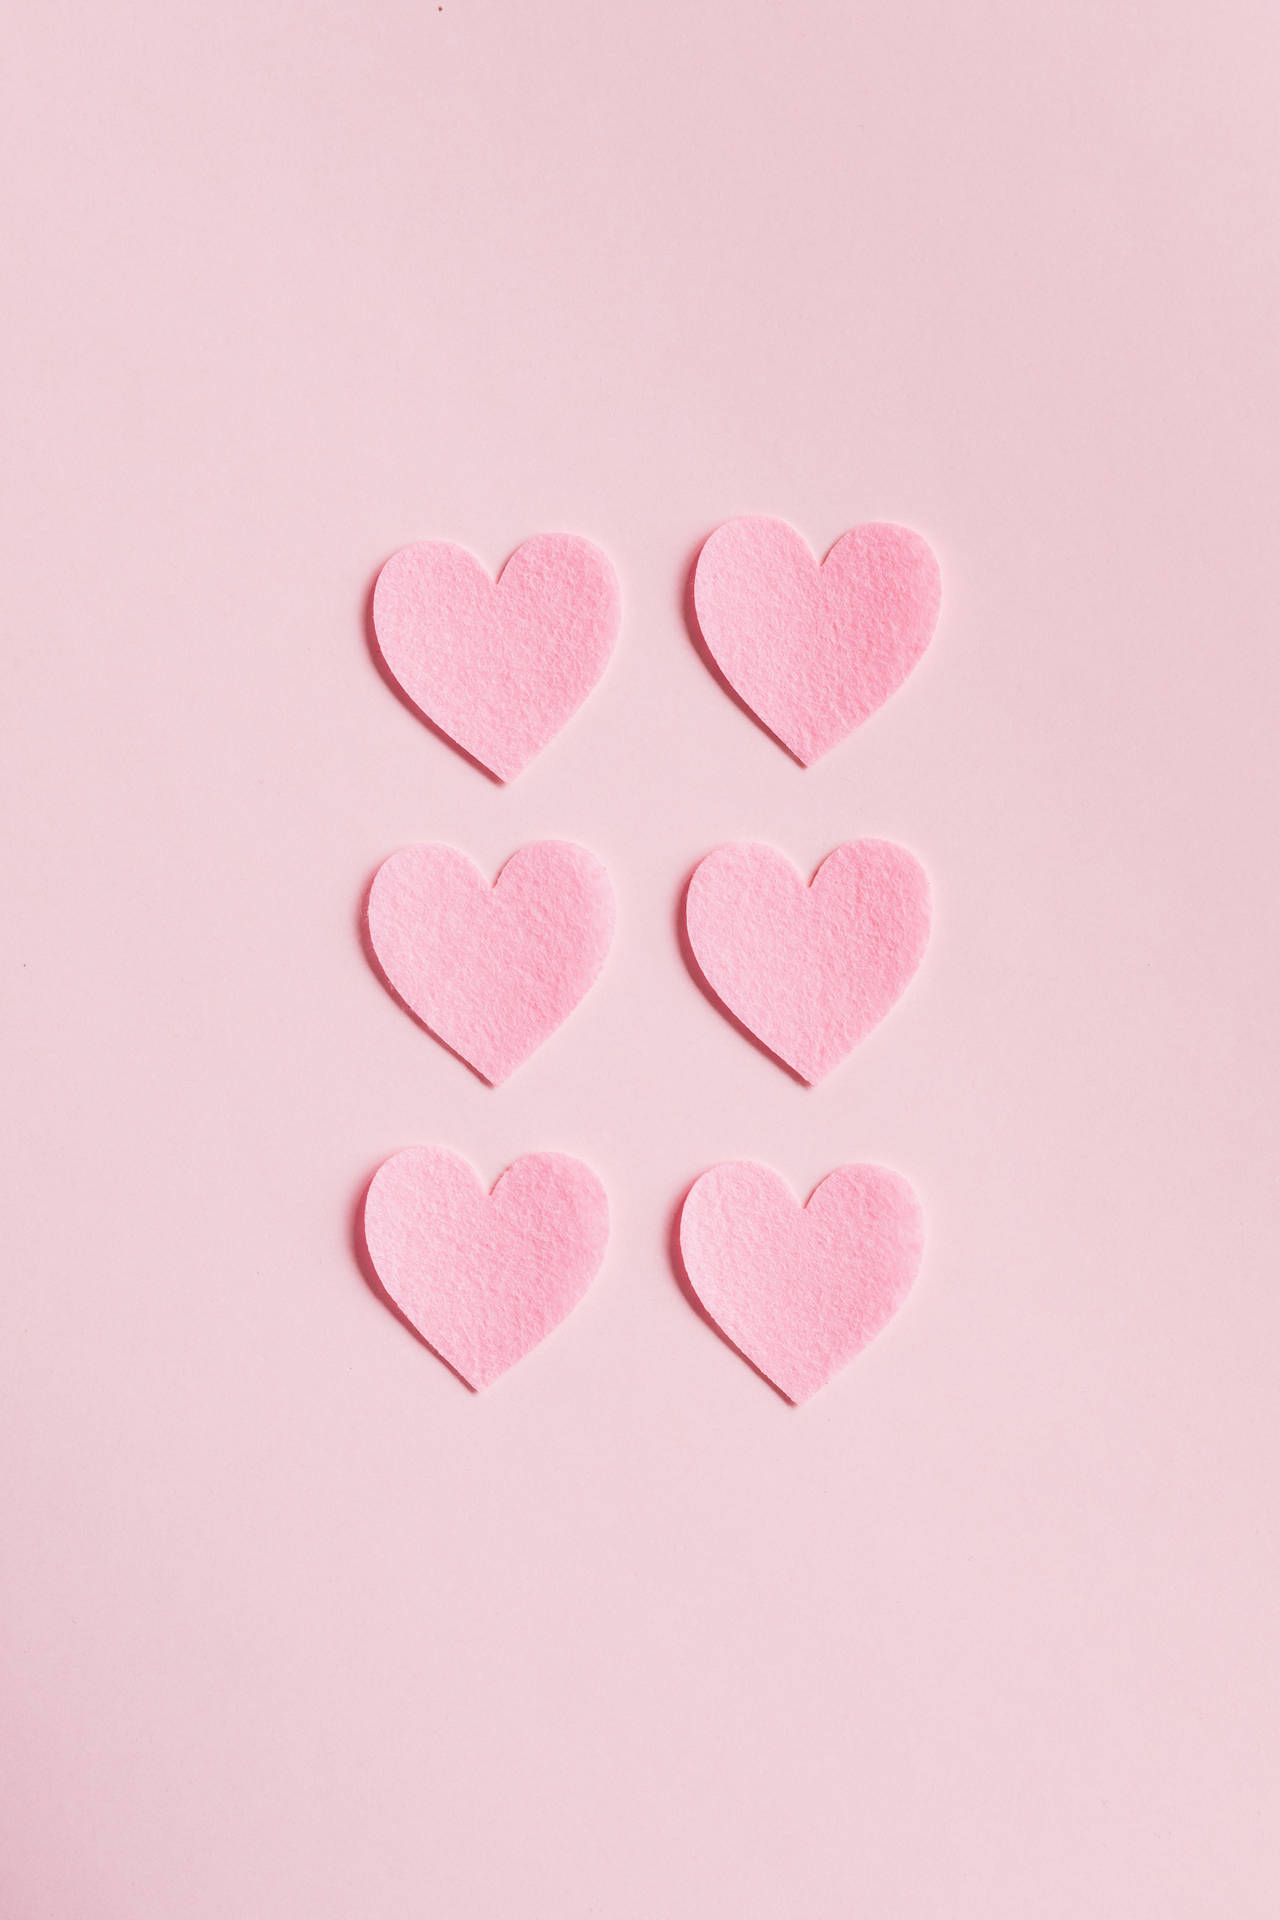 Minimalist Hearts On Pastel Pink Colors Wallpaper